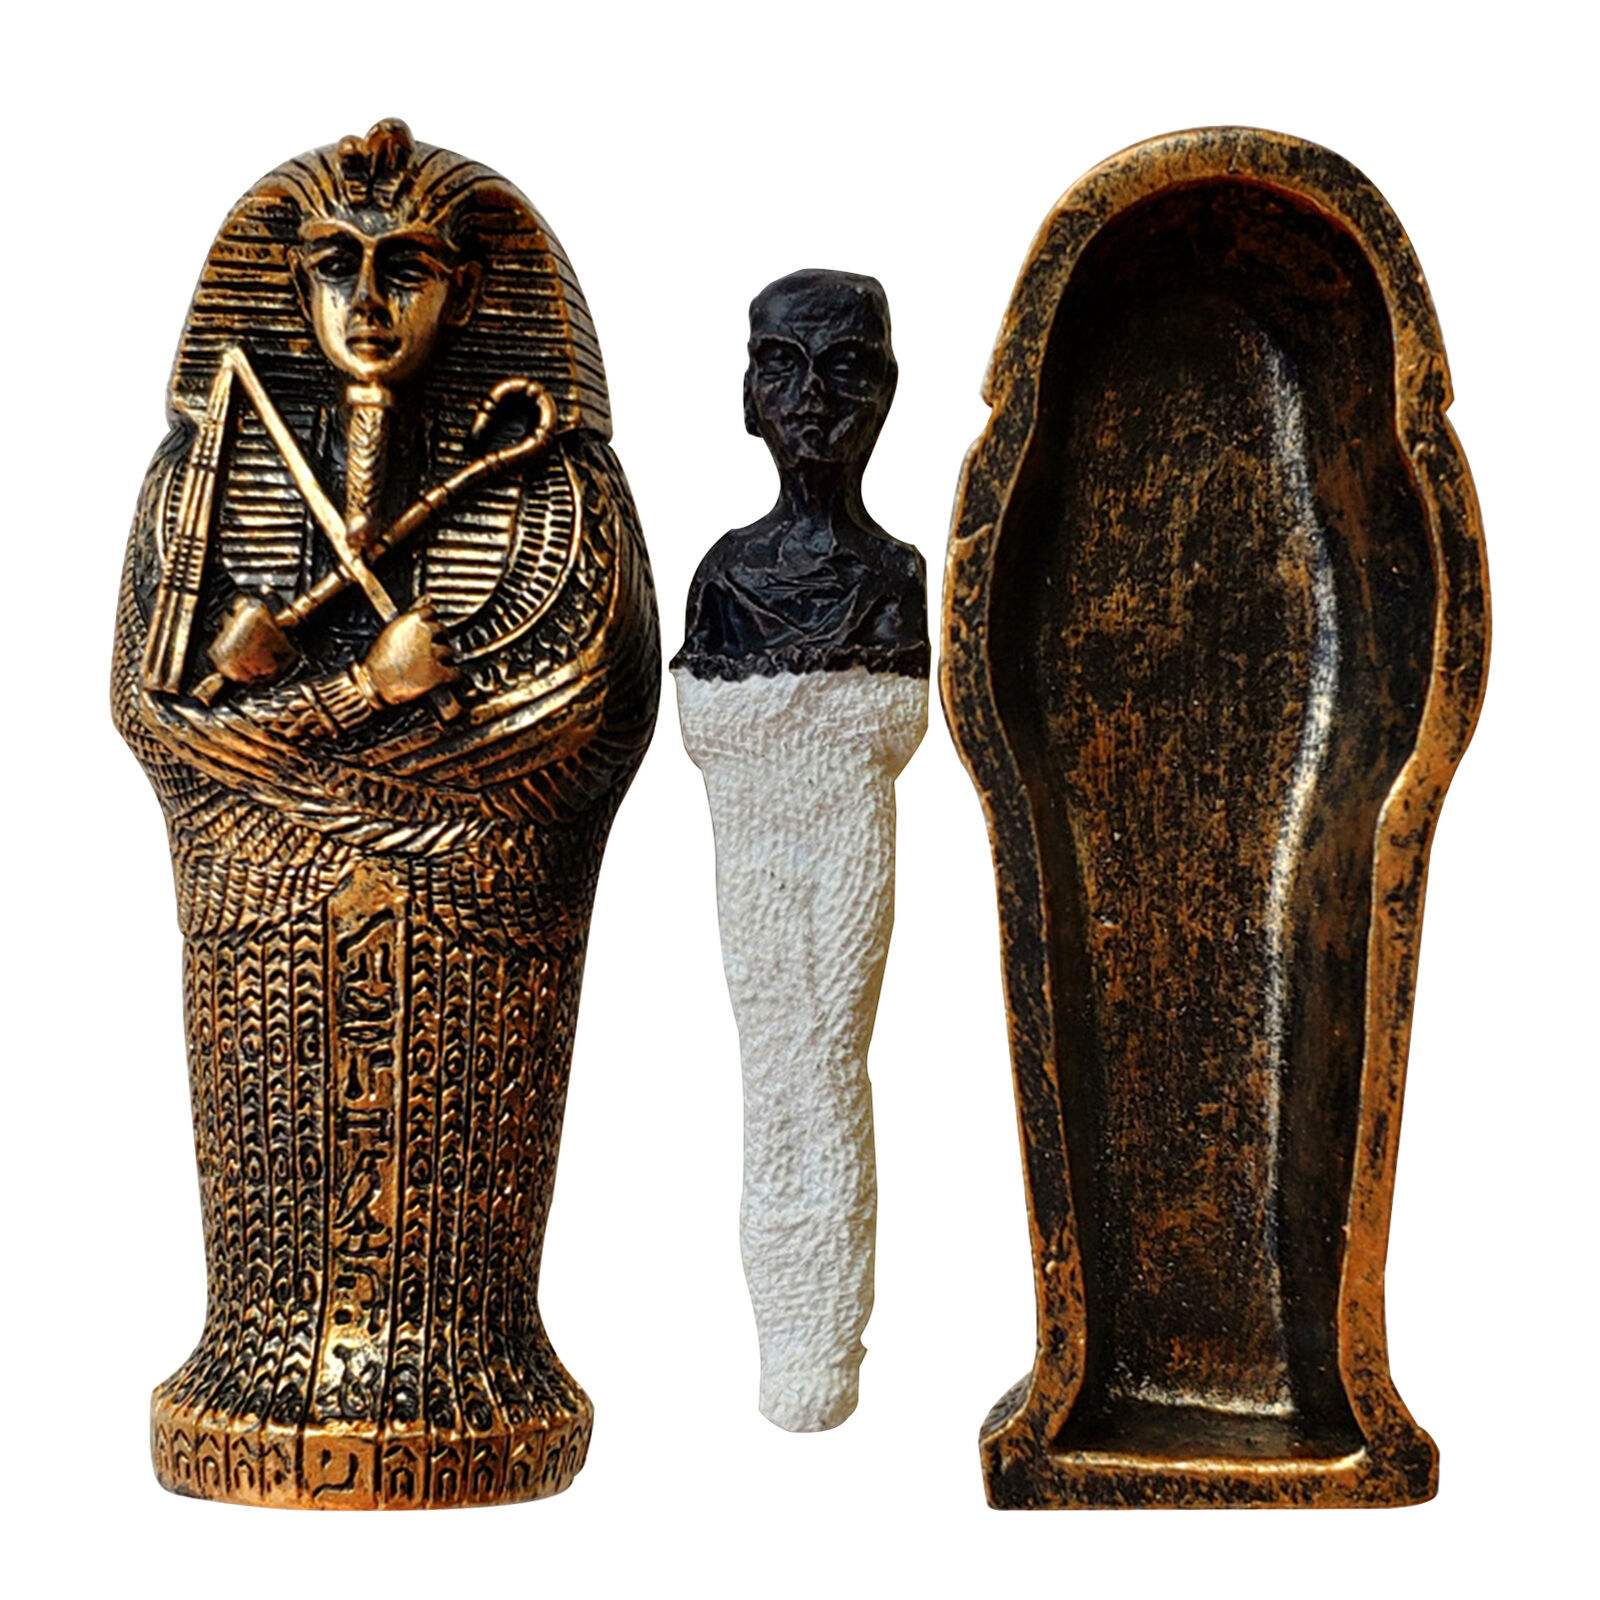 Miniature Resin Ancient Egyptian Coffin Figurine Sculpture Egypt Mummy Statue 